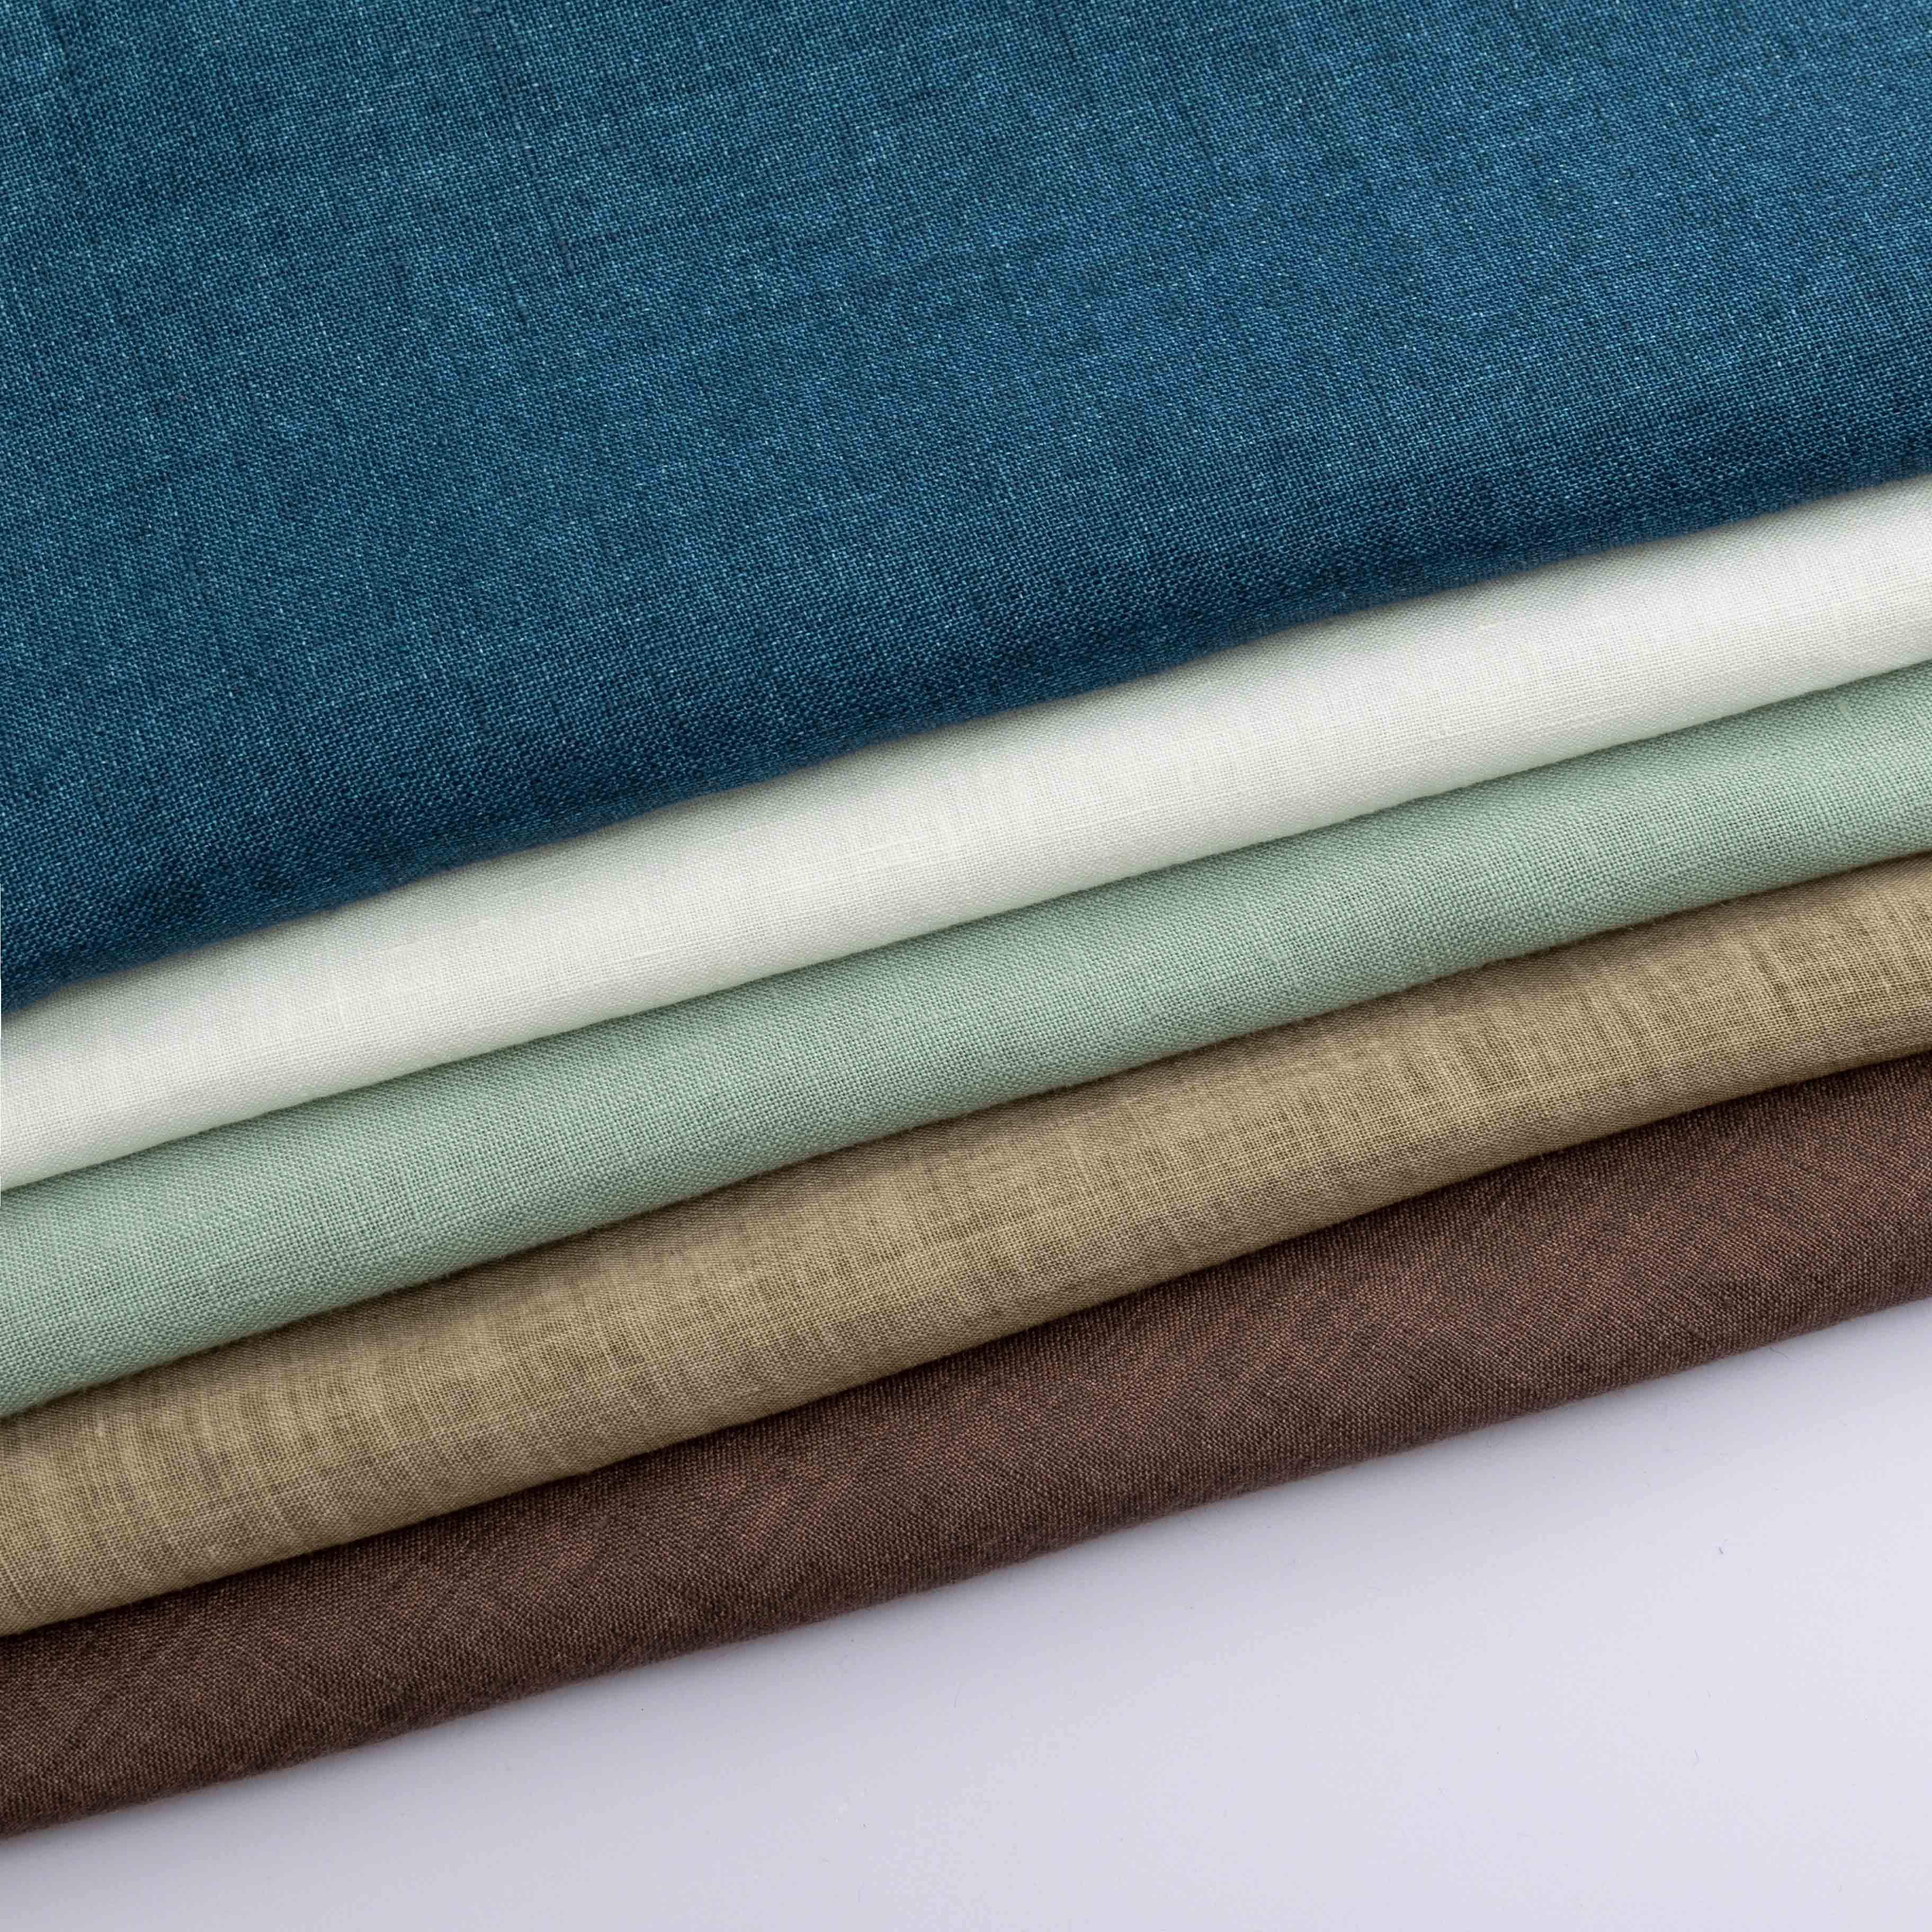 High Quality 100% linen cotton fabric for dress shirt